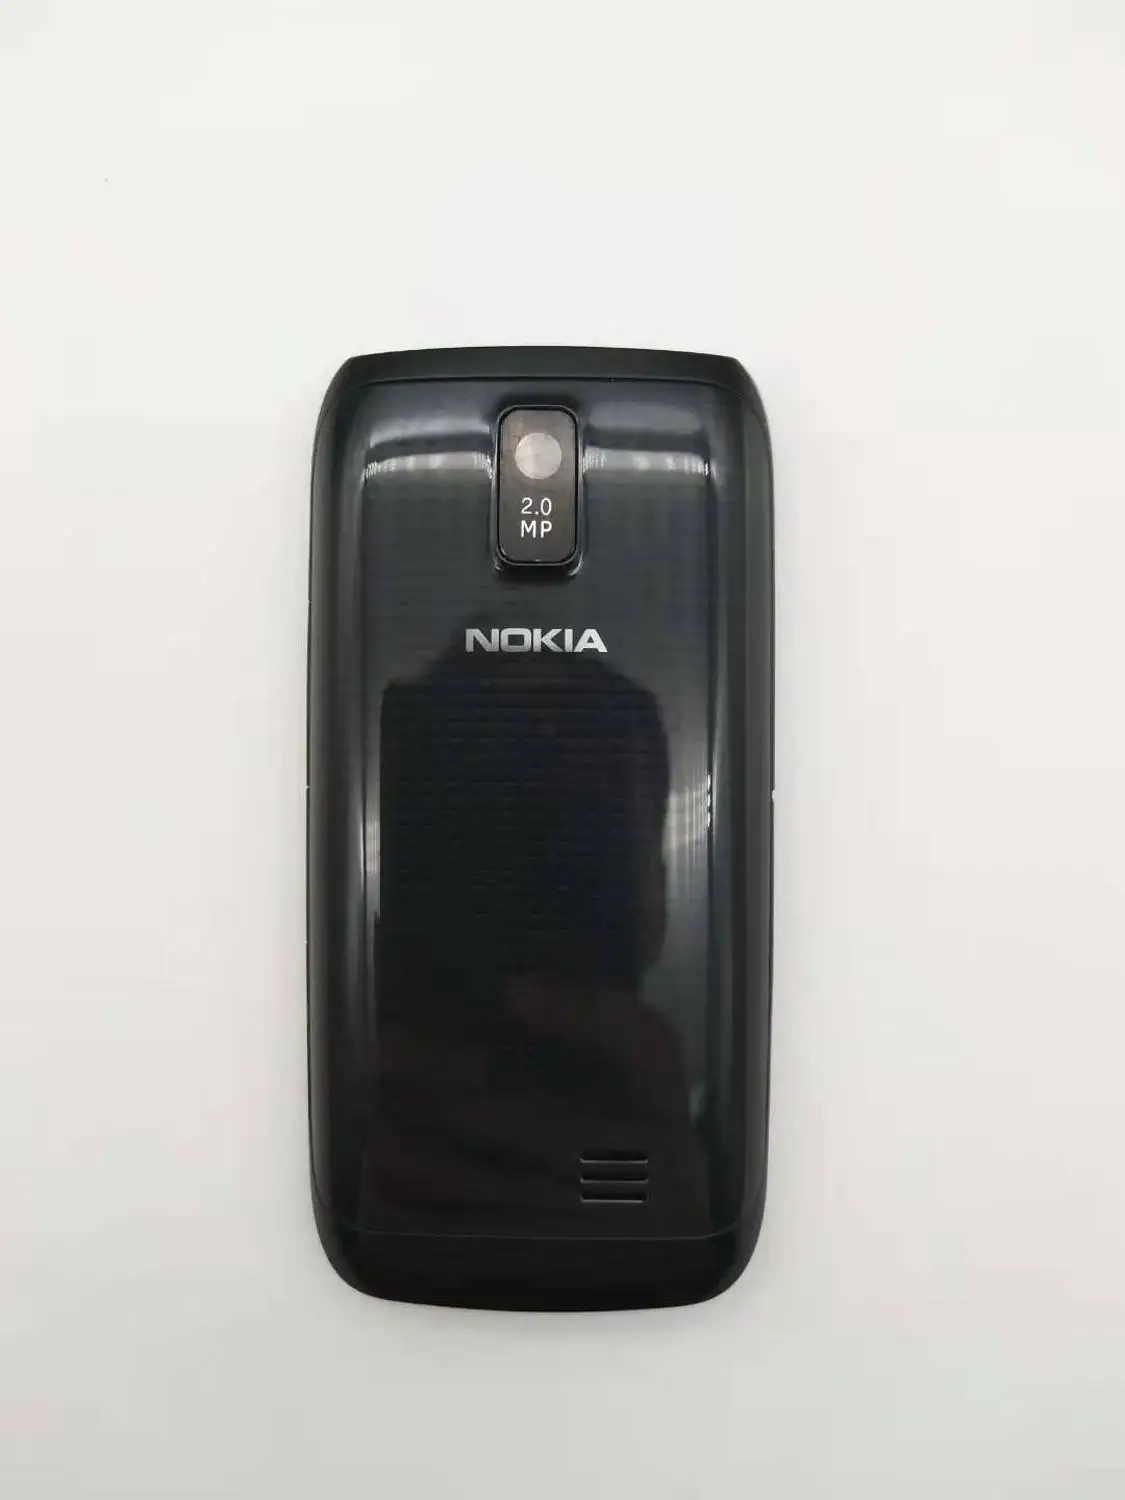 nokia asha 309 refurbished original unlocked asha 309 mobile phone 3 0touch screen wifi nokia asha charme 309 phone free global shipping